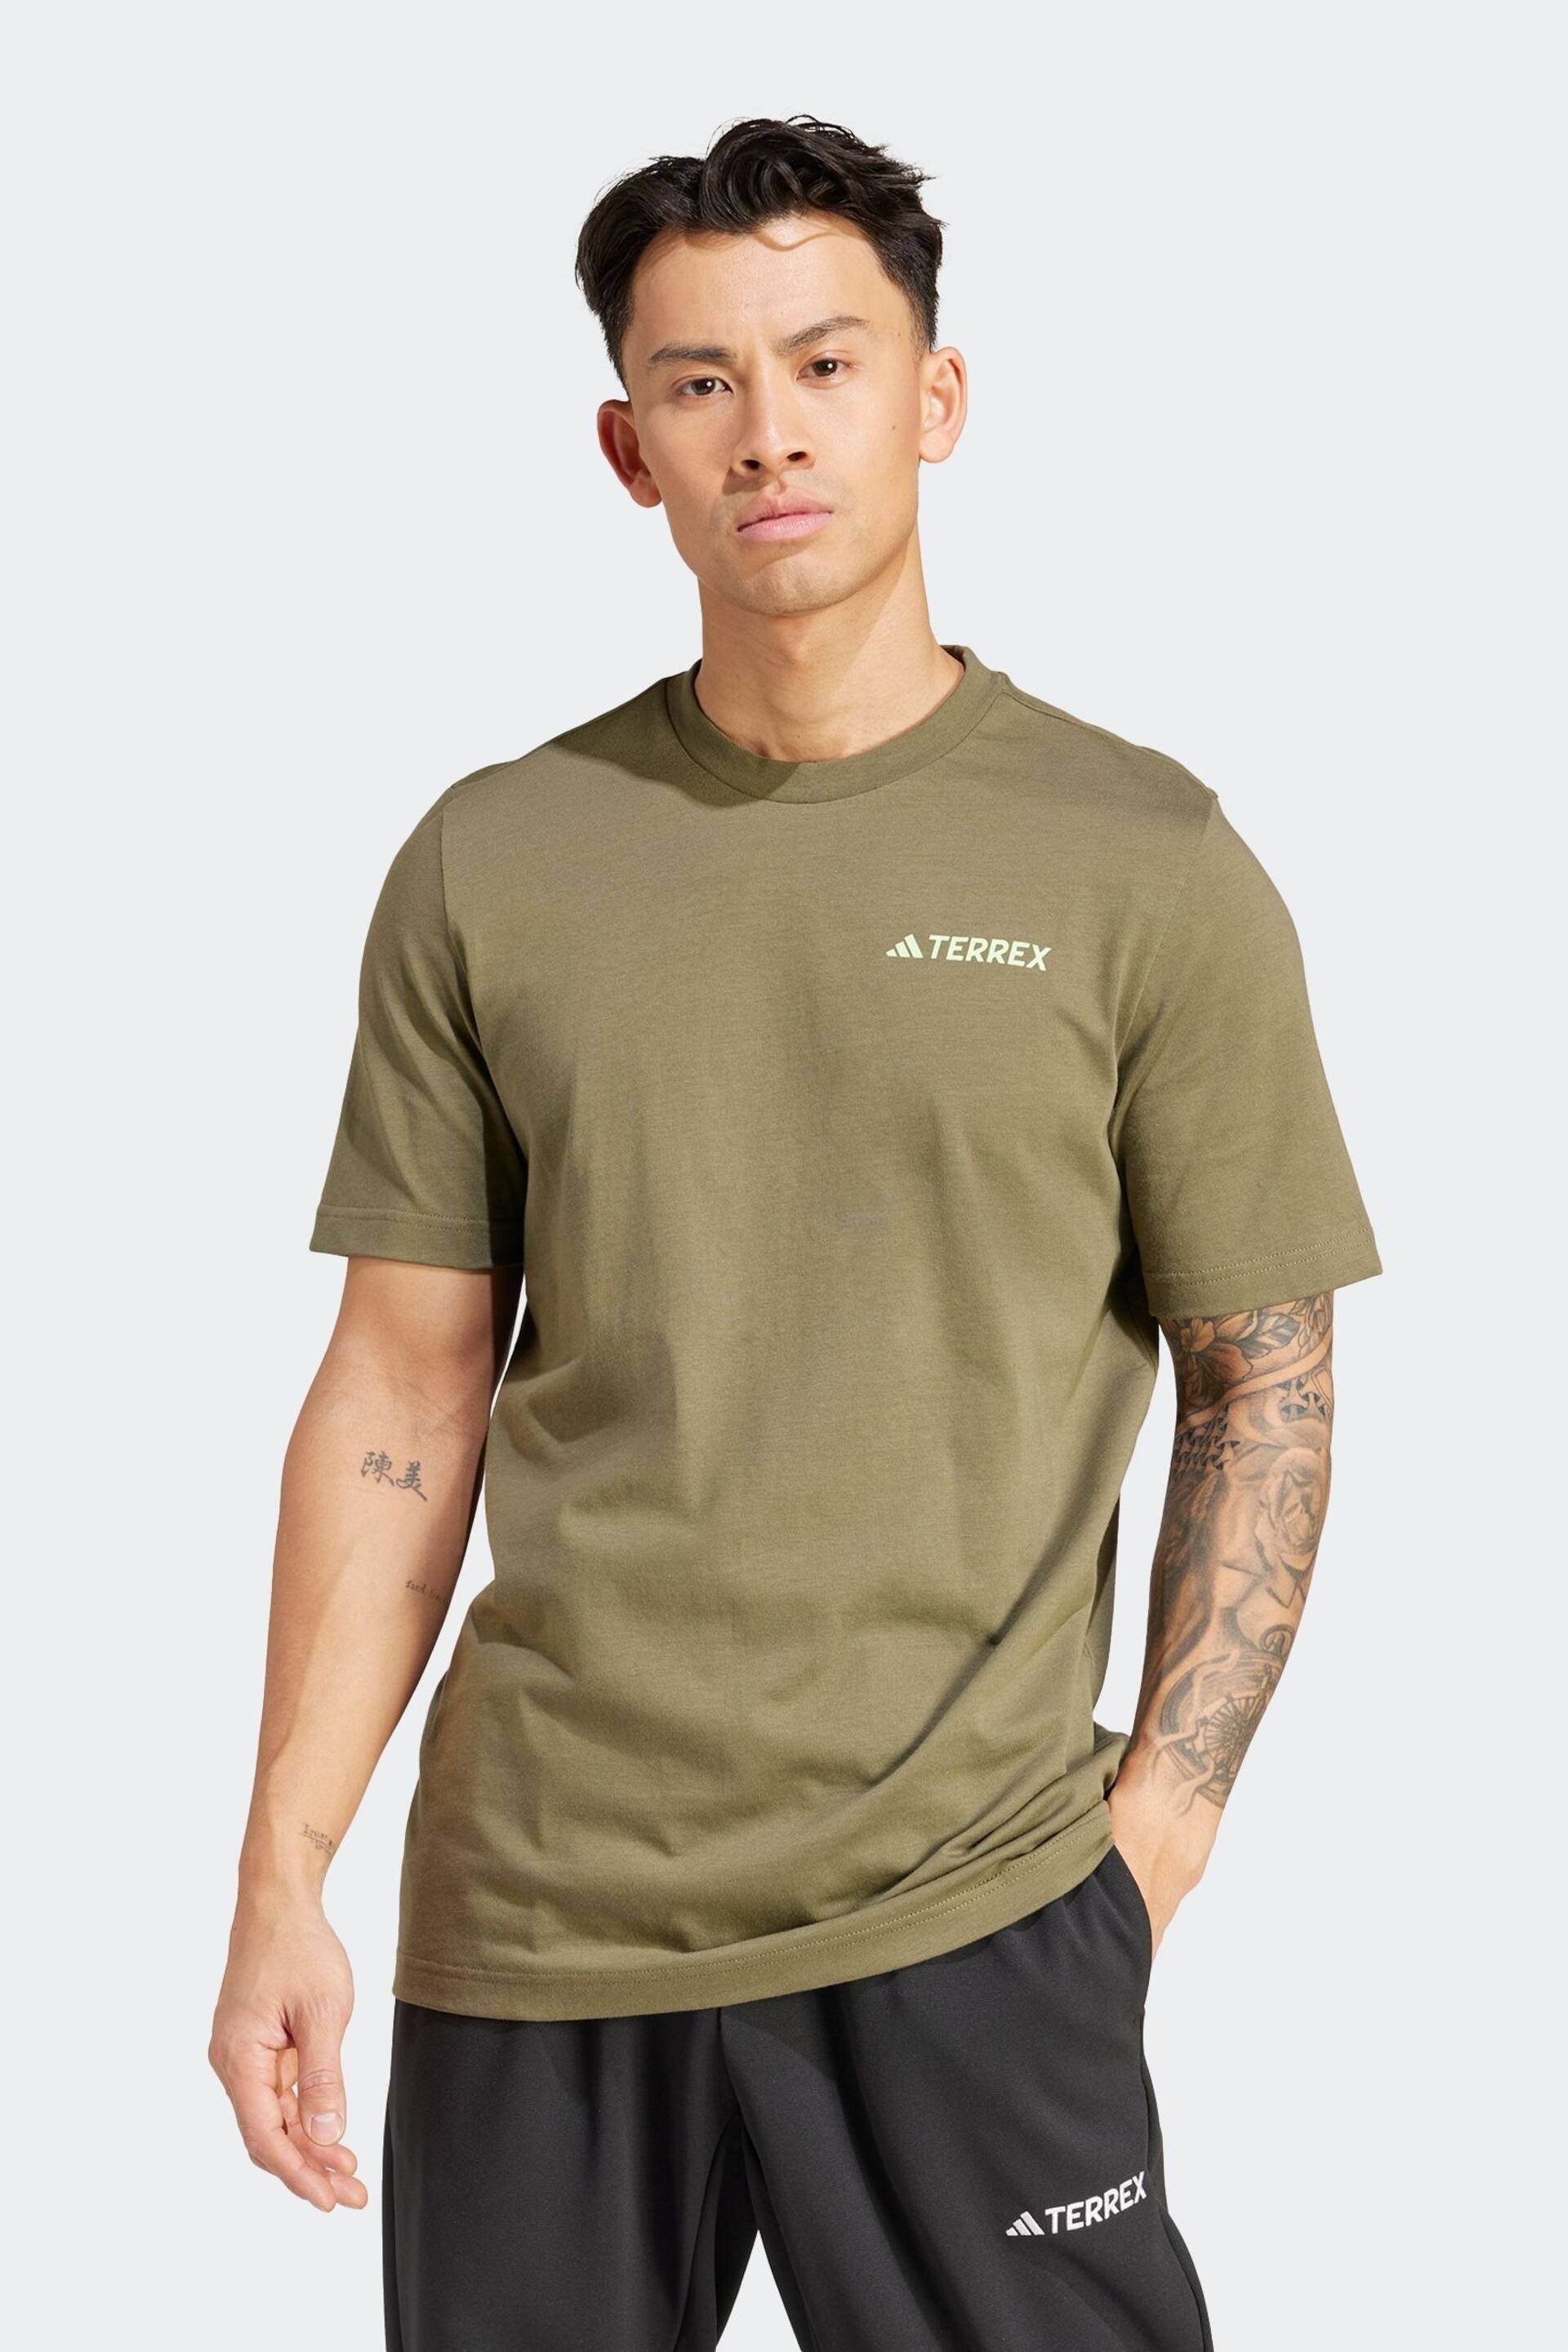 adidas Terrex Khaki Green Graphic T-Shirt - Image 1 of 7